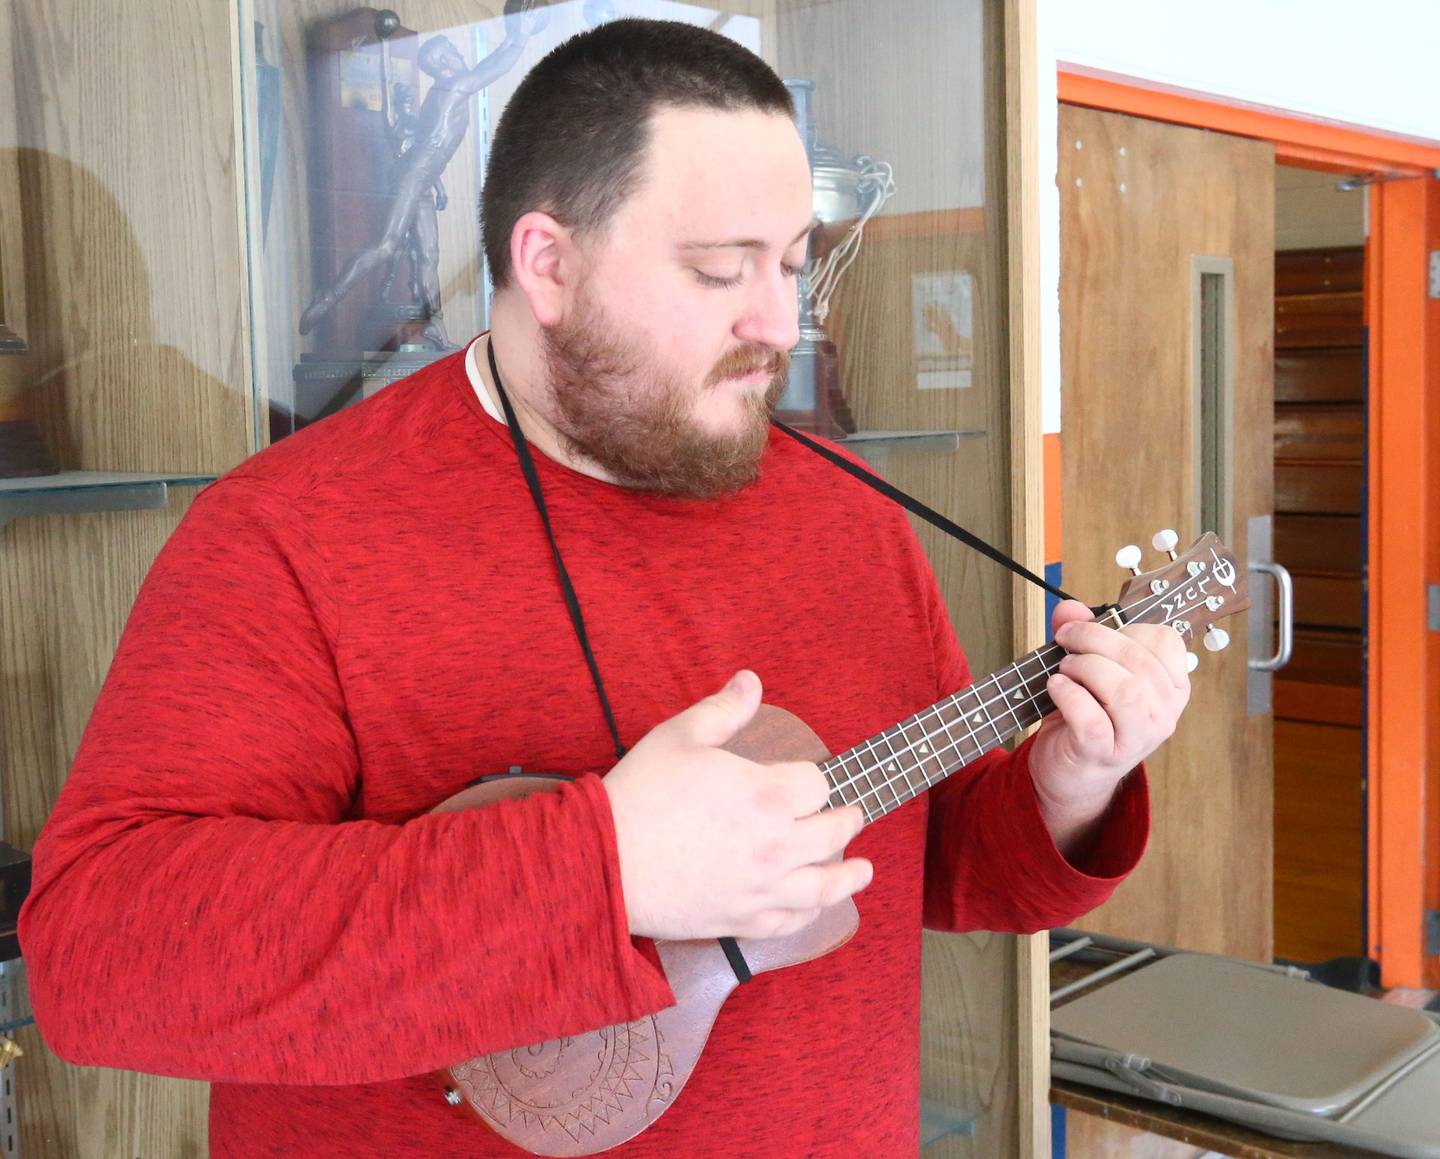 DePue music teacher Sam Miller, plays a ukulele at DePue School on Thursday, March 31, 2022 in DePue.